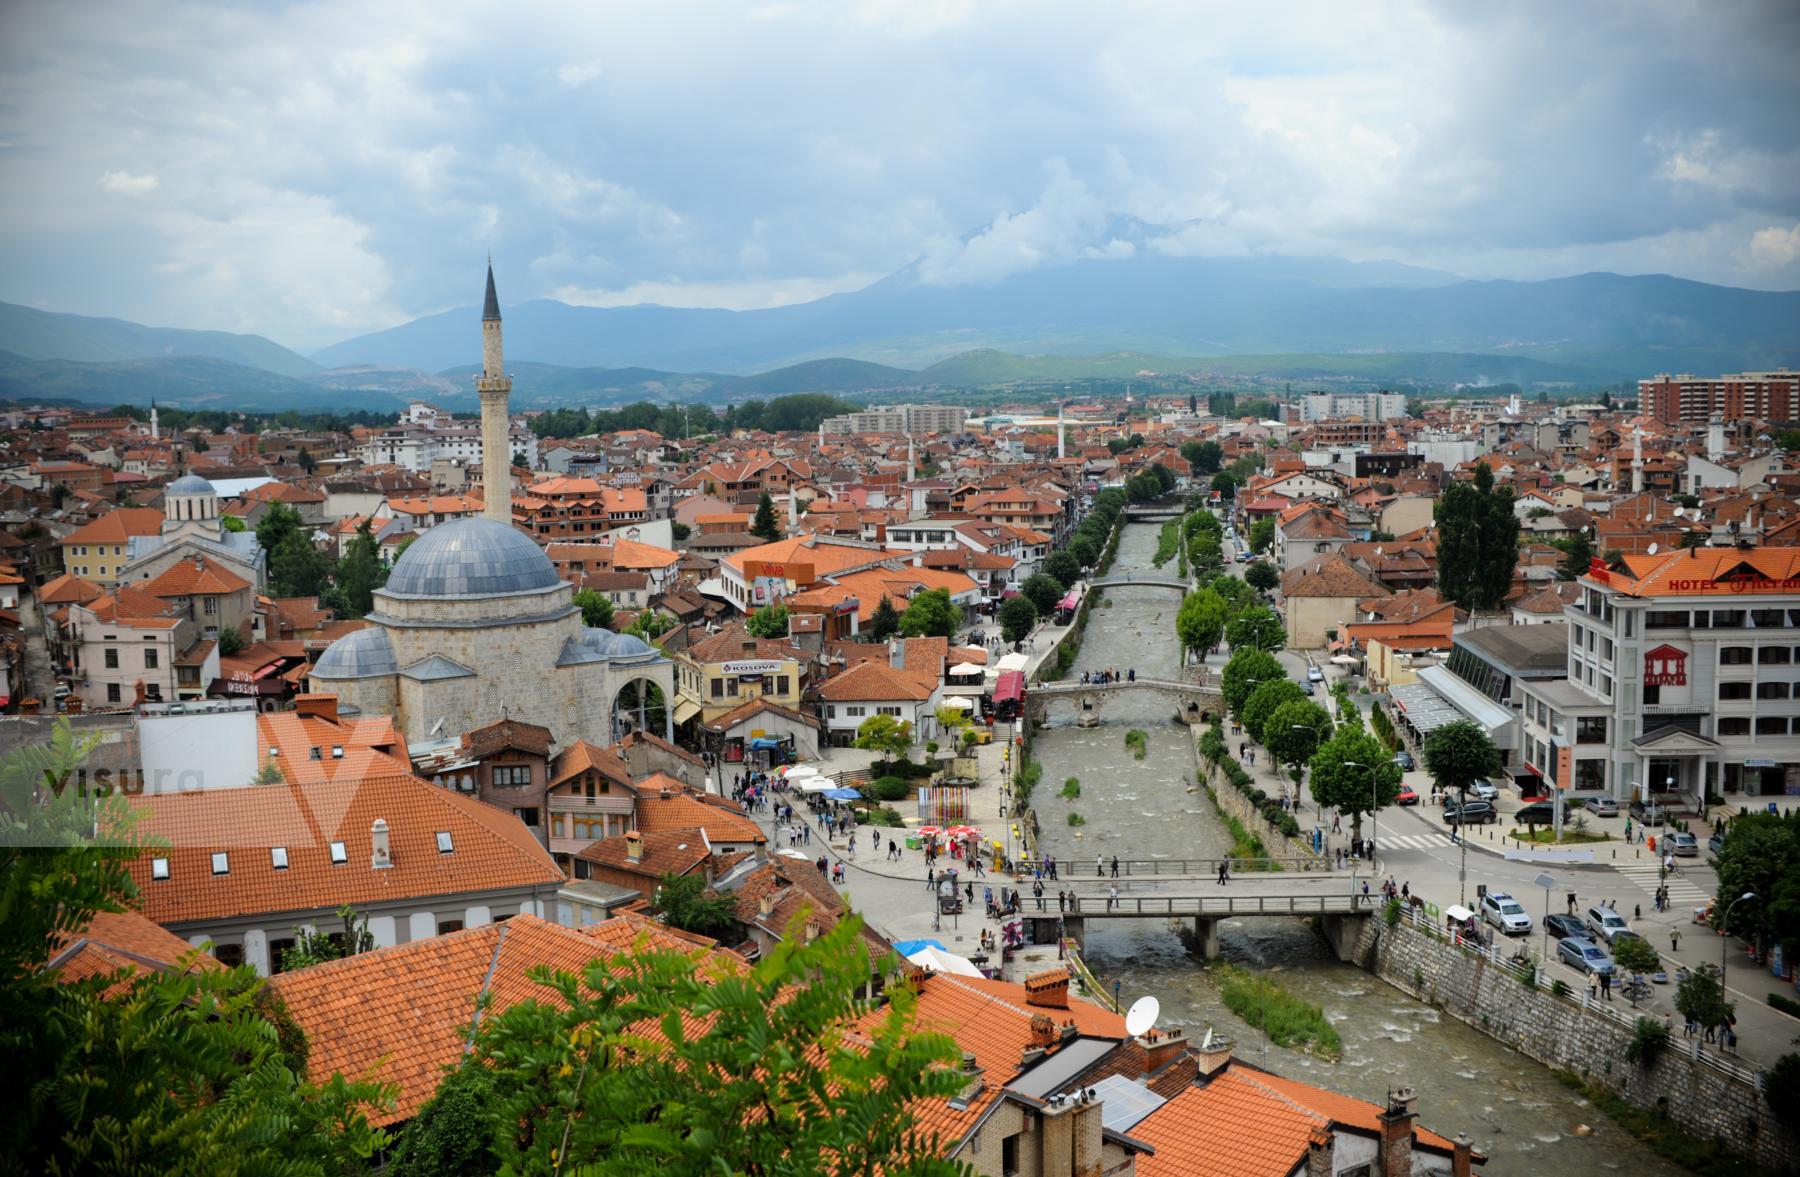 Purchase Prizren by Nick St.Oegger